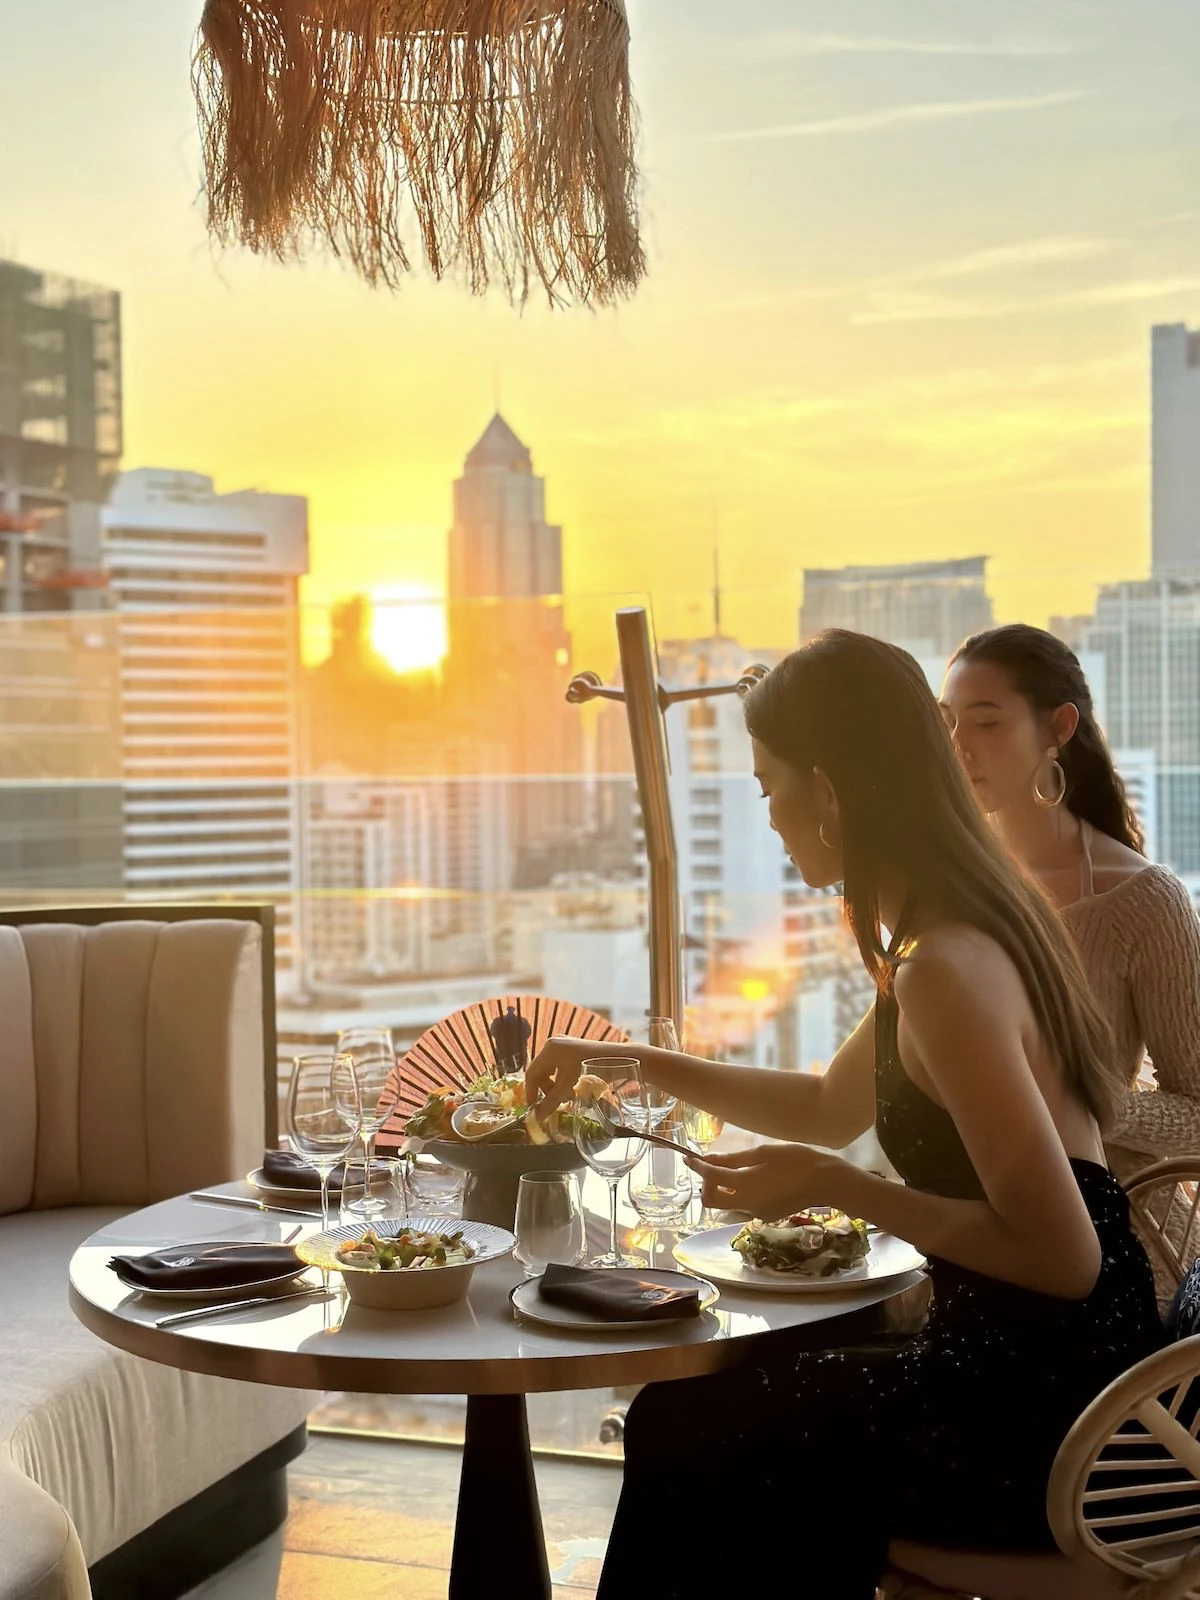 Thai models eating at Pastel Bangkok rooftop bar during the sunset